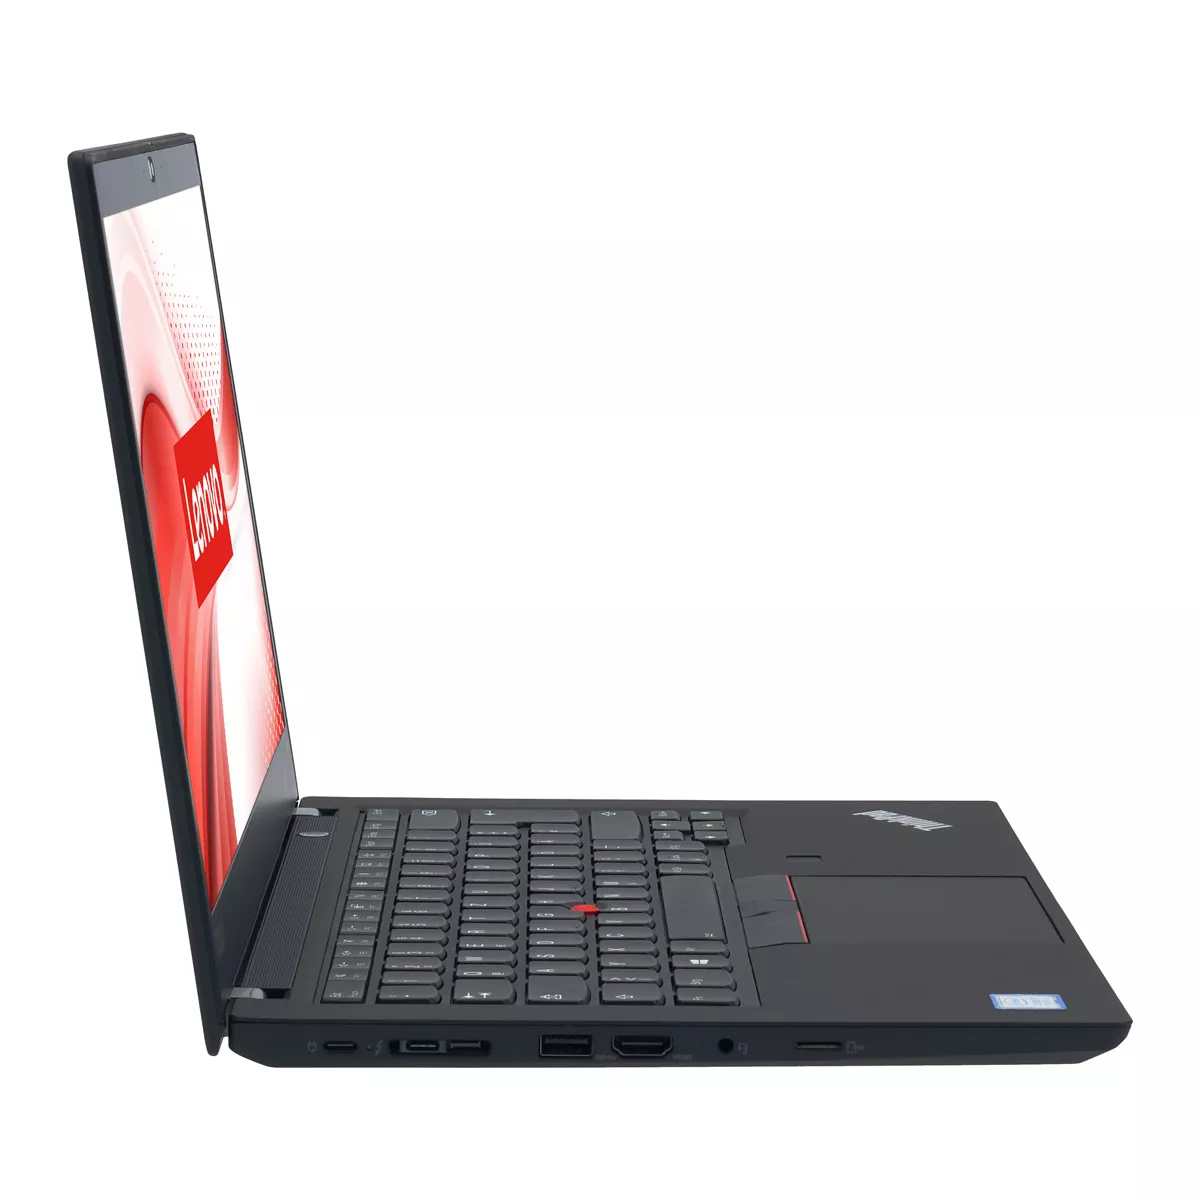 Lenovo ThinkPad T490 Core i7 8665U 16 GB 500 GB M.2 nVME SSD Webcam Touch A+